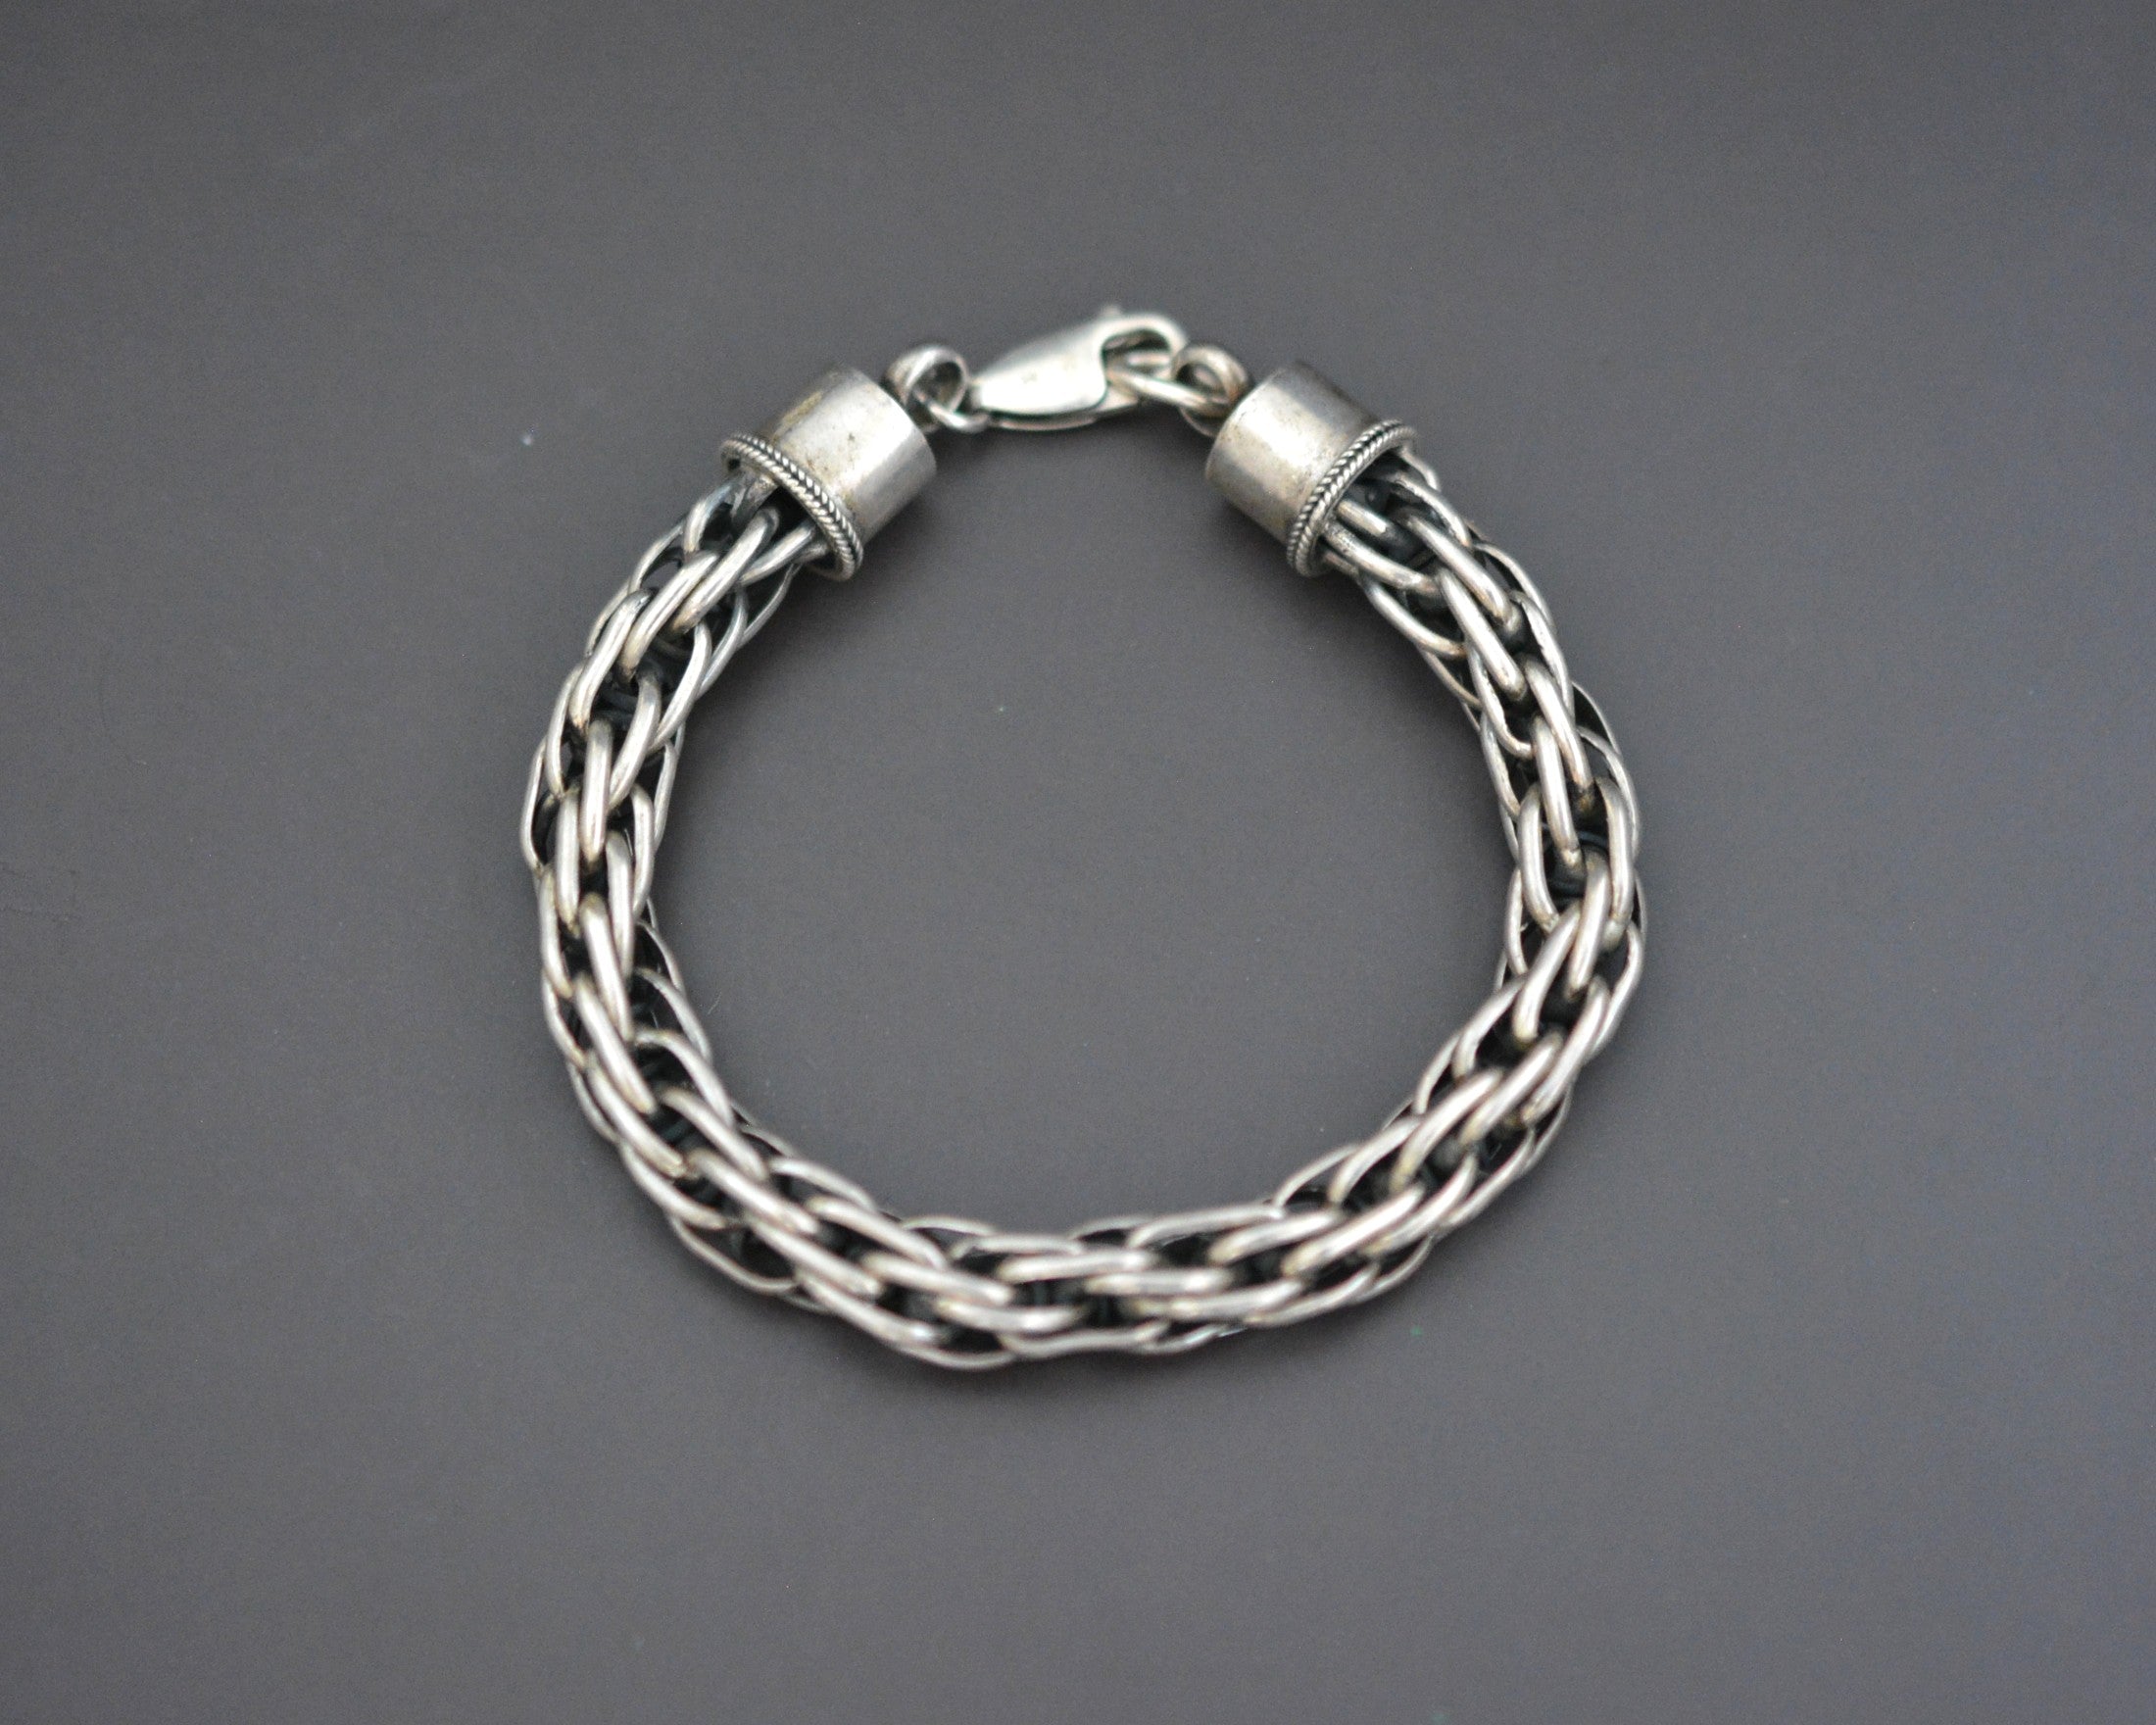 Thick Woven Silver Snake Chain Bracelet - XS size